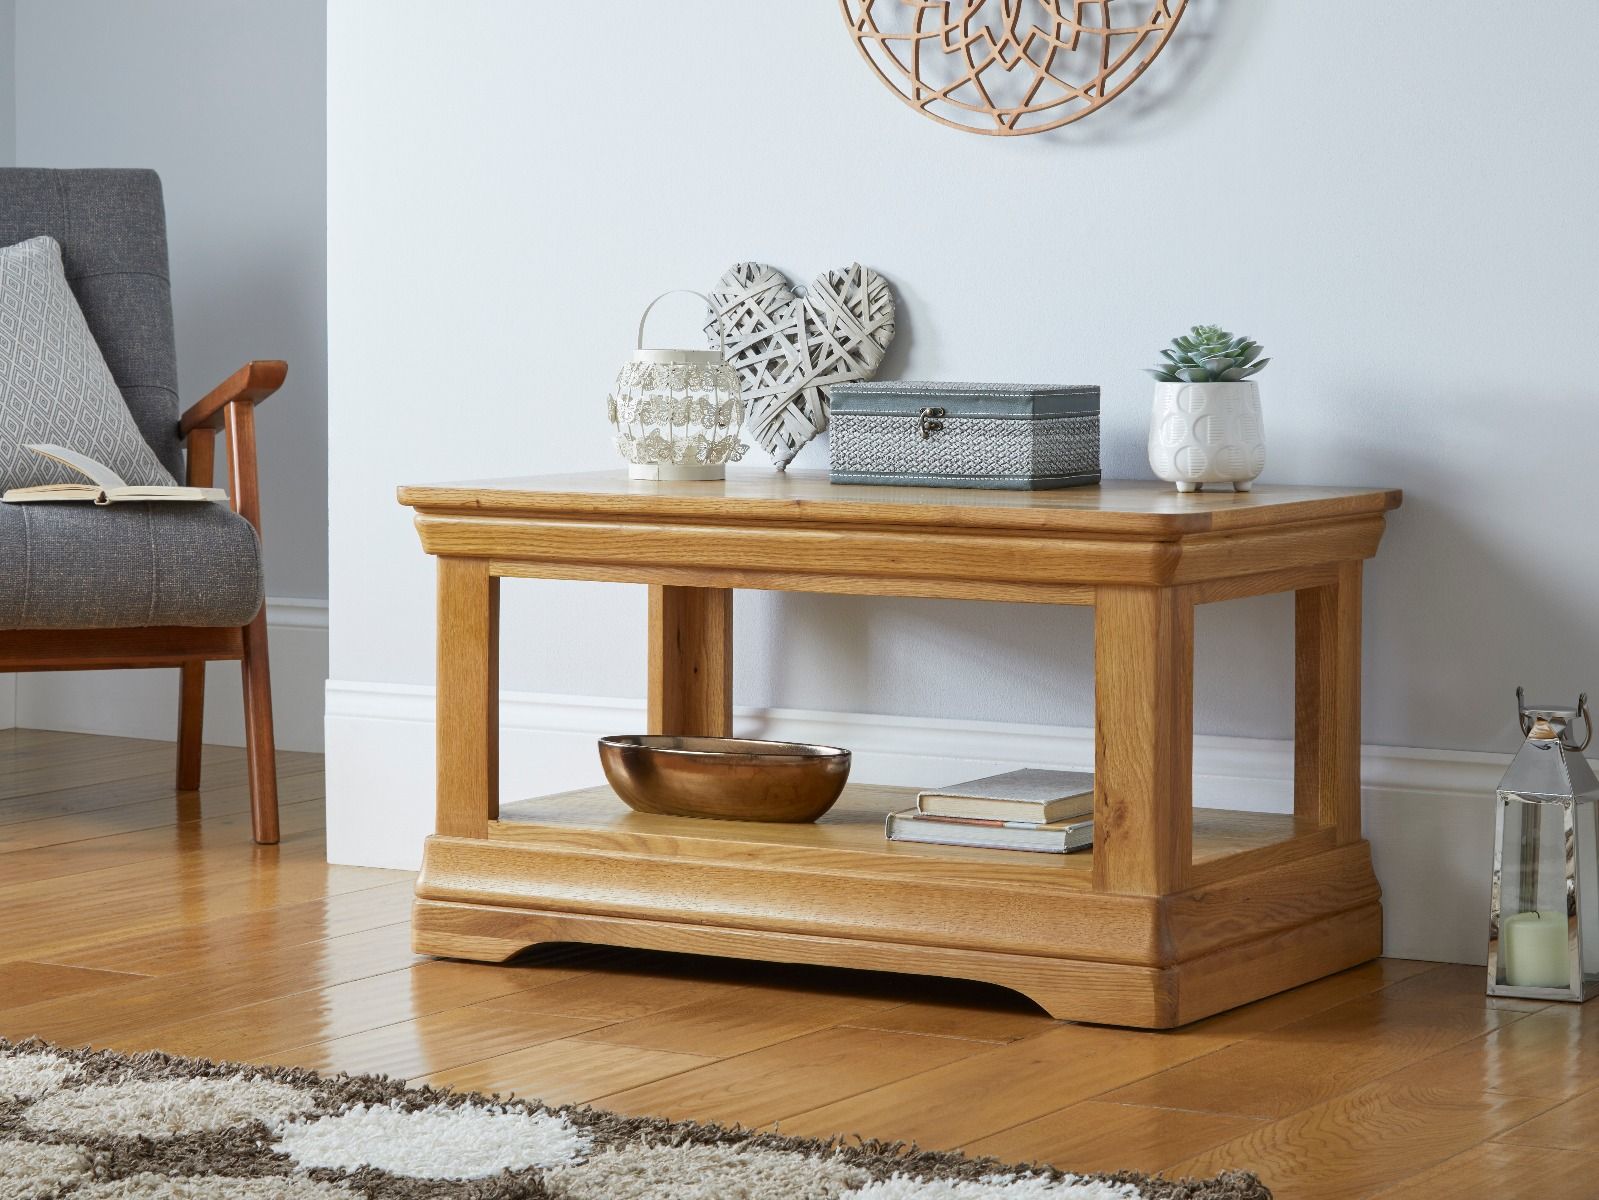 Farmhouse Oak Coffee Table with Shelf - WINTER SALE